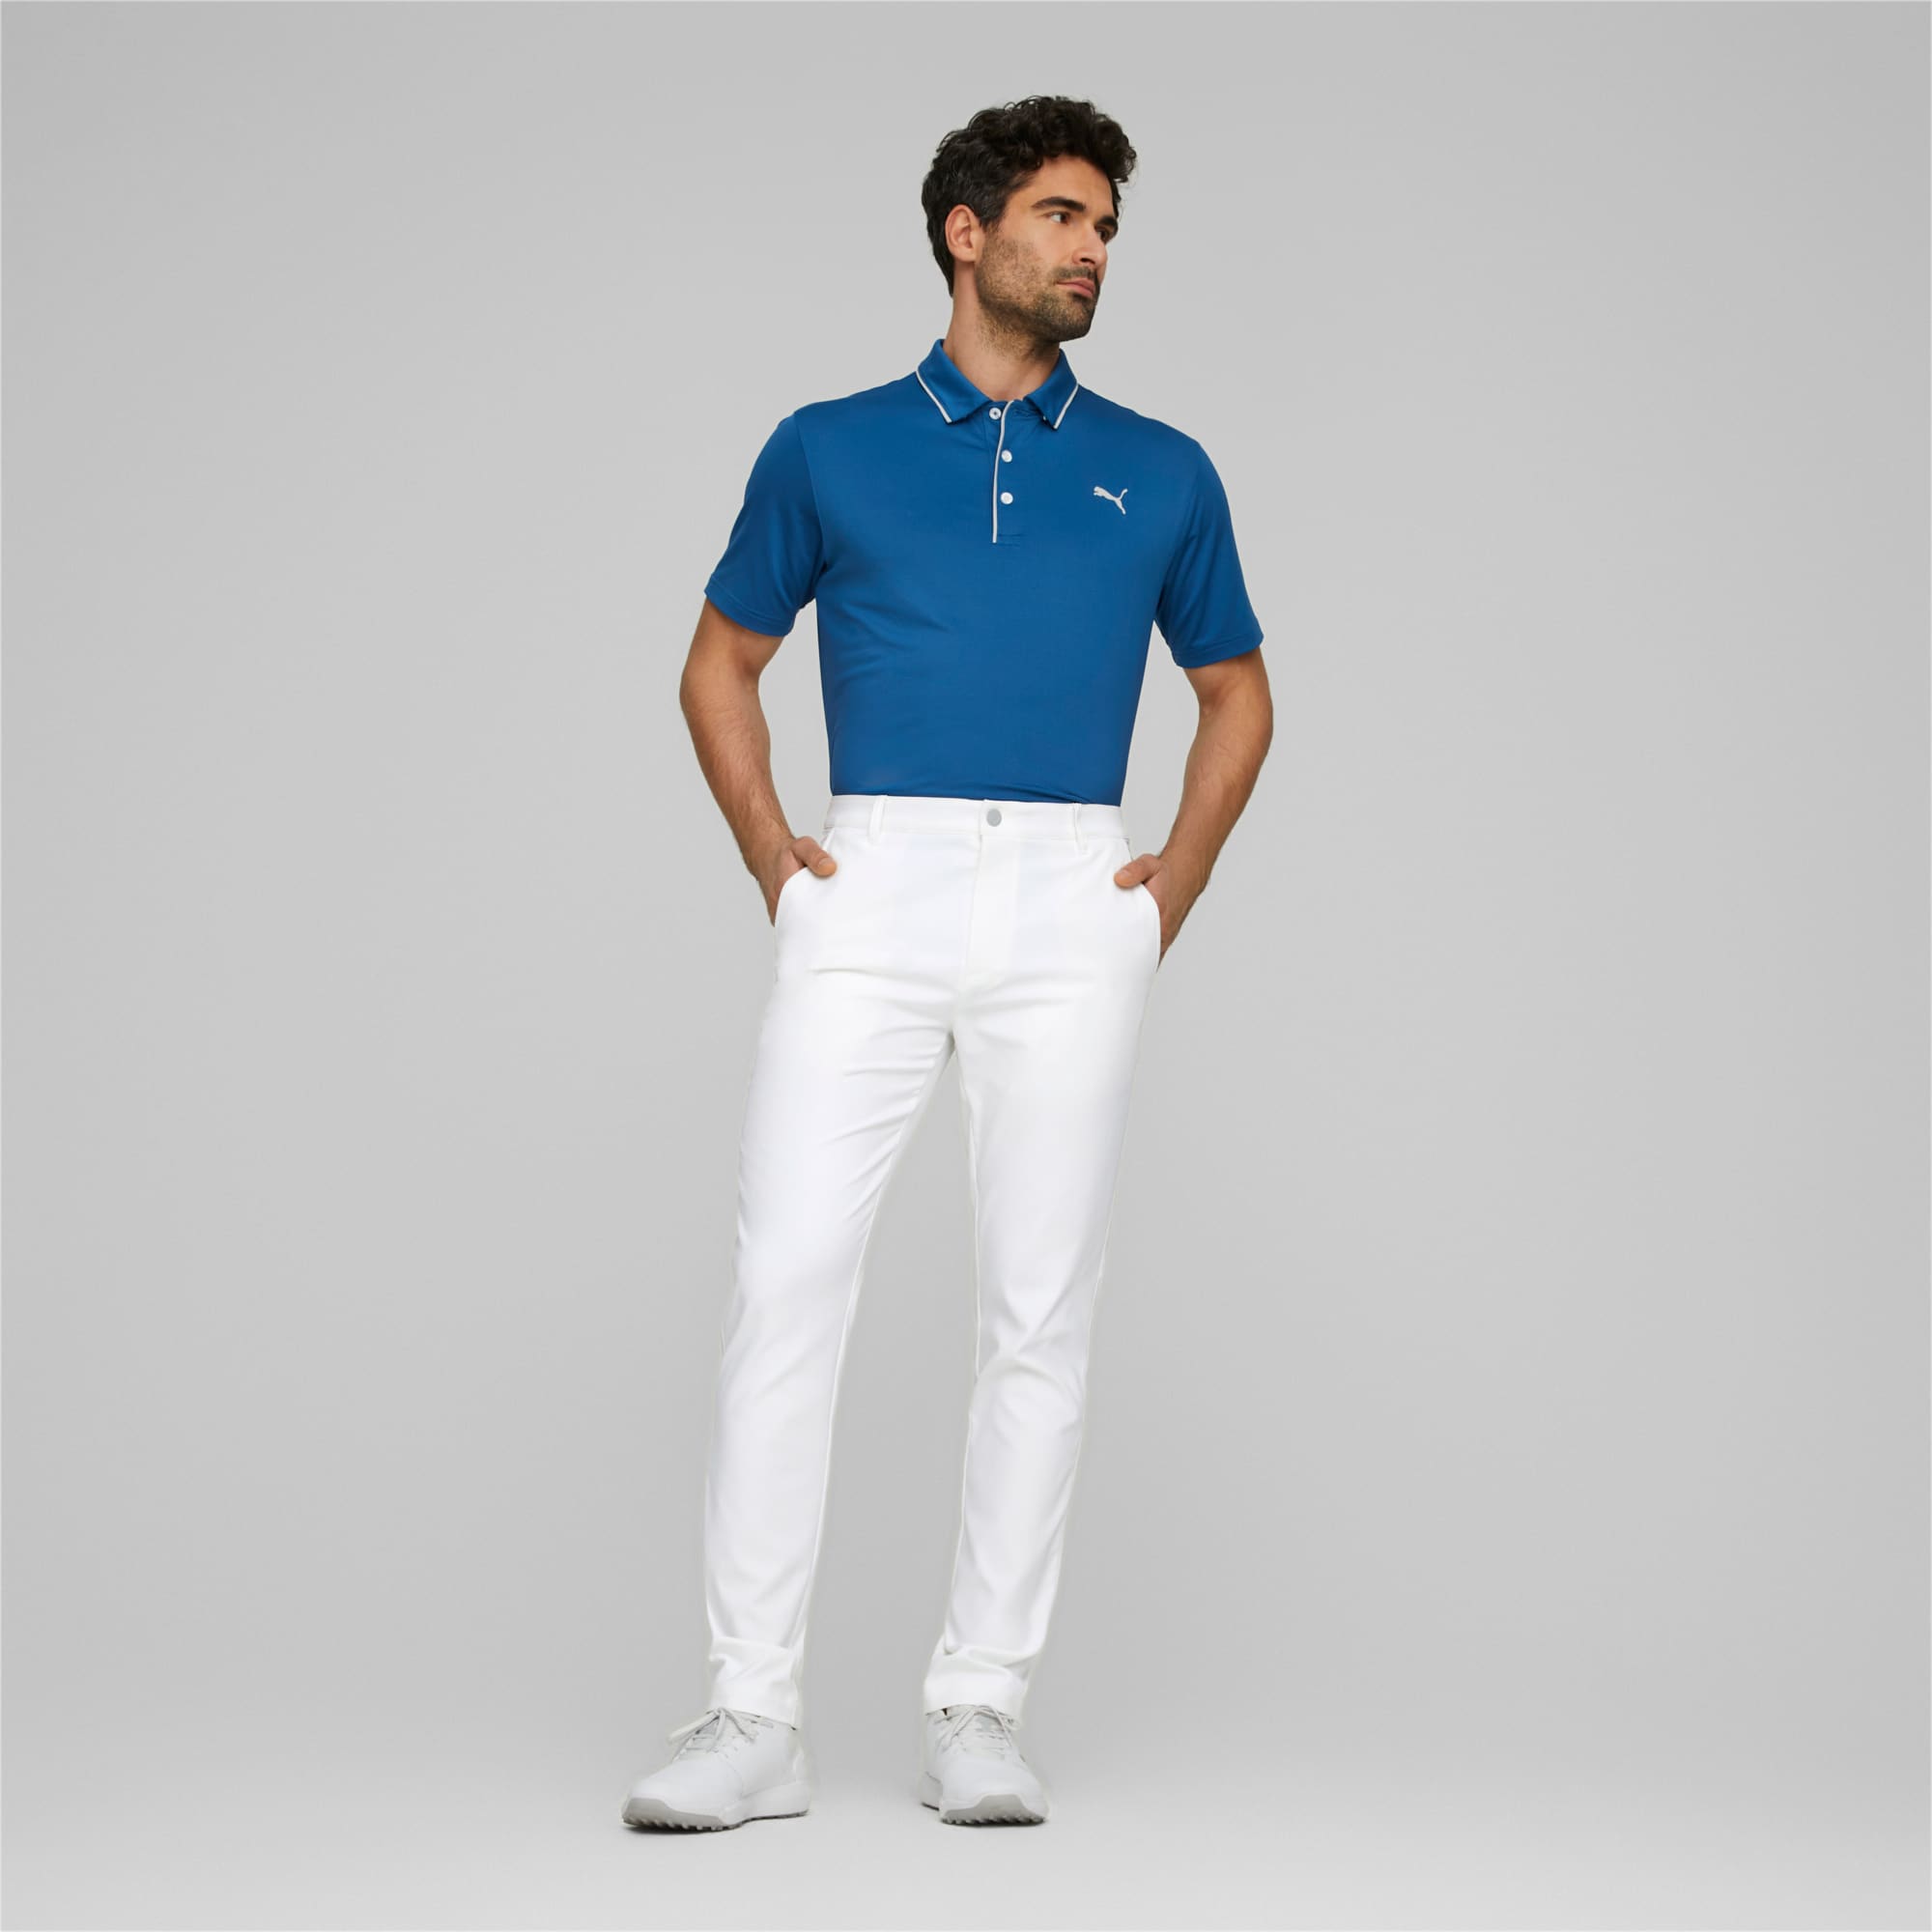 PUMA Dealer Tailored Golf Pants Men, White Glow